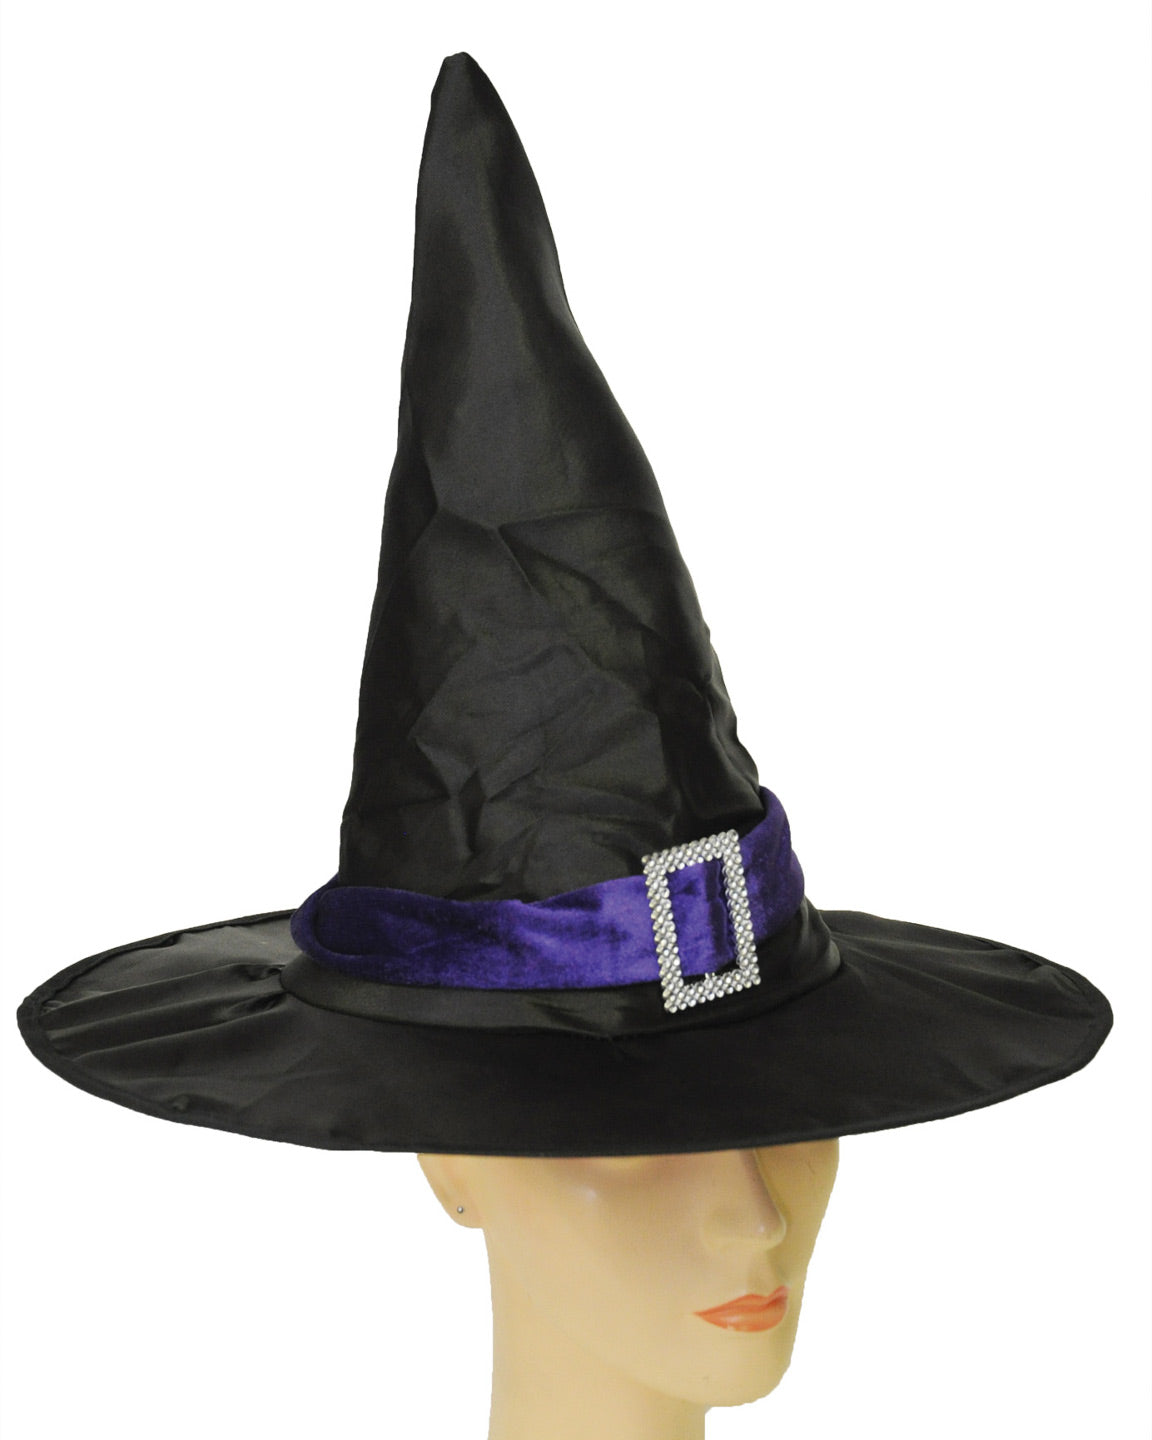 Elegant Witch Hat